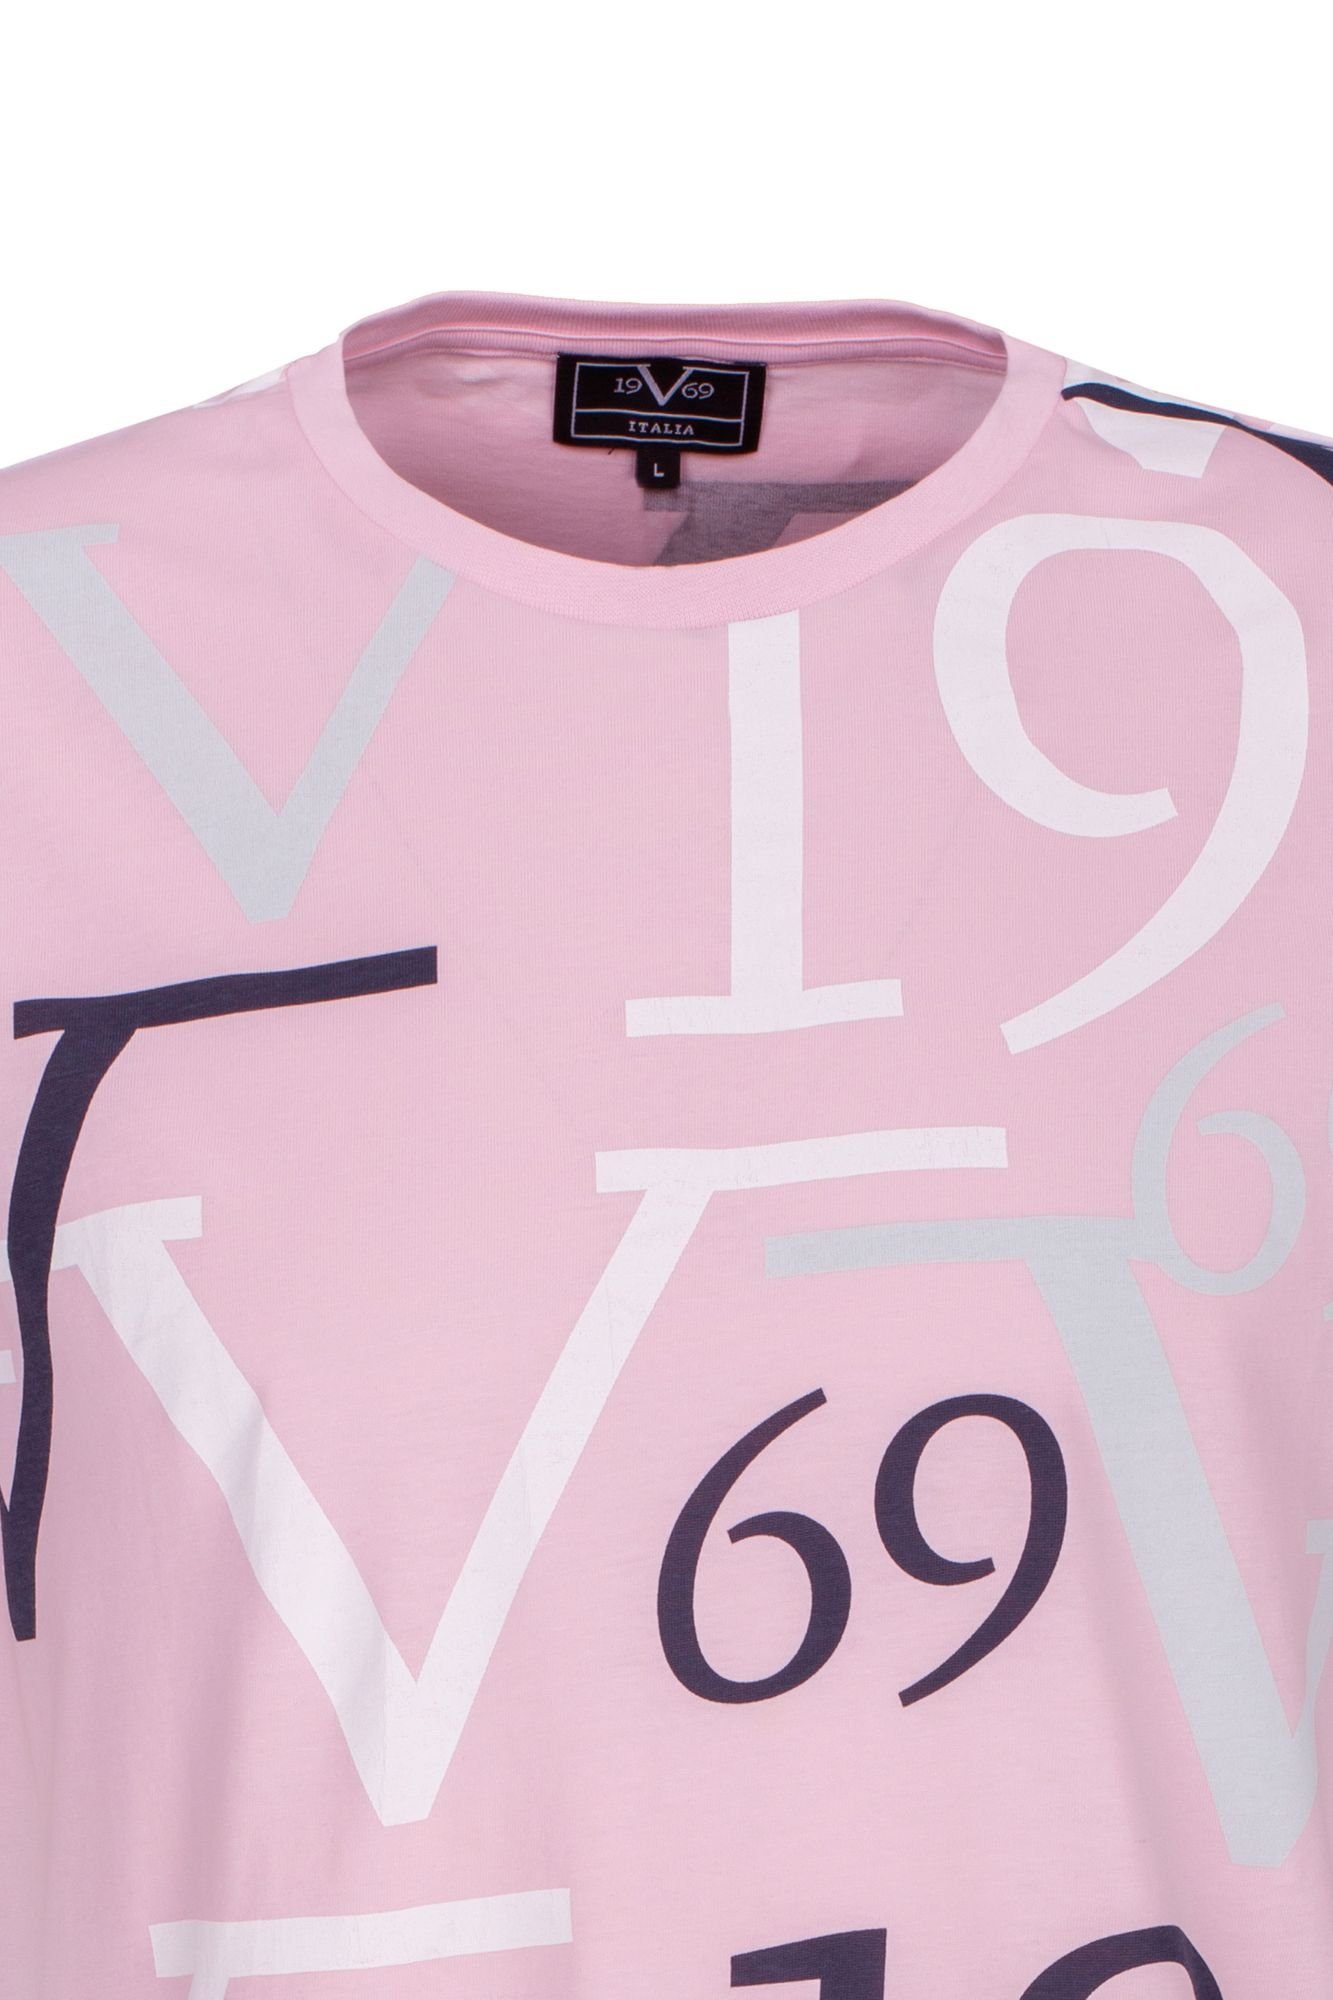 19V69 Italia by Edoardo T-Shirt Versace